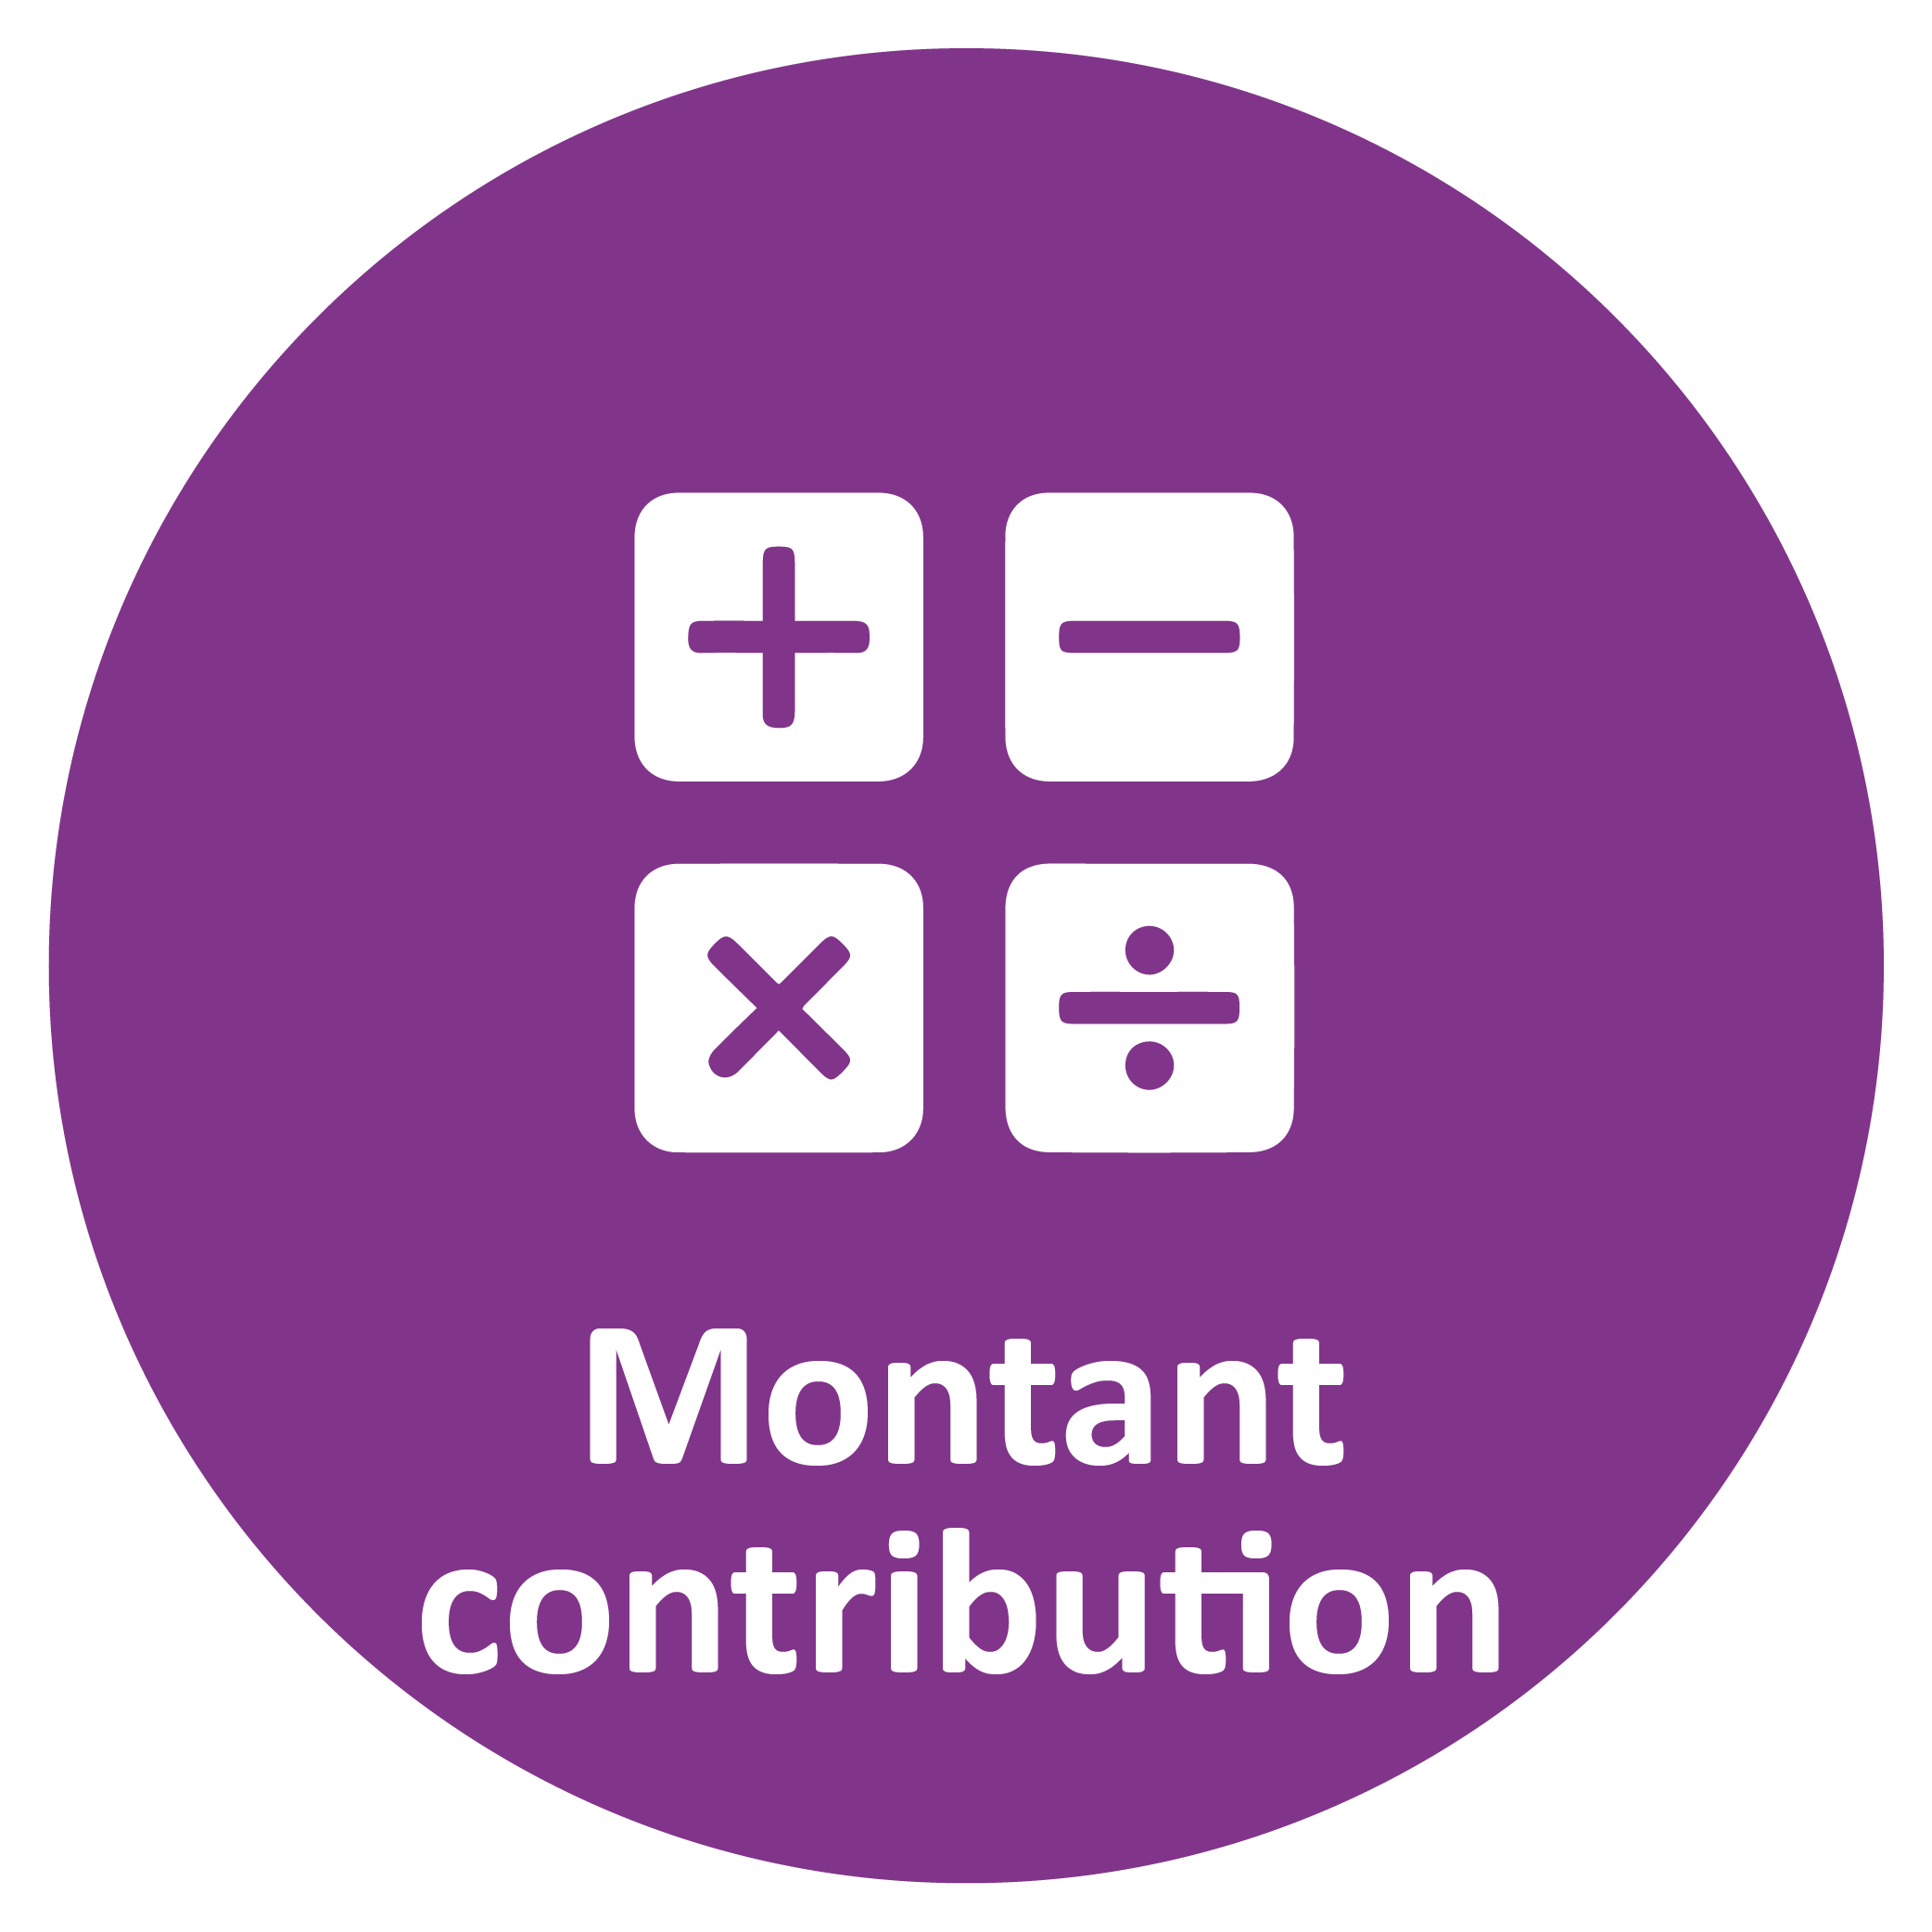 Montant contribution